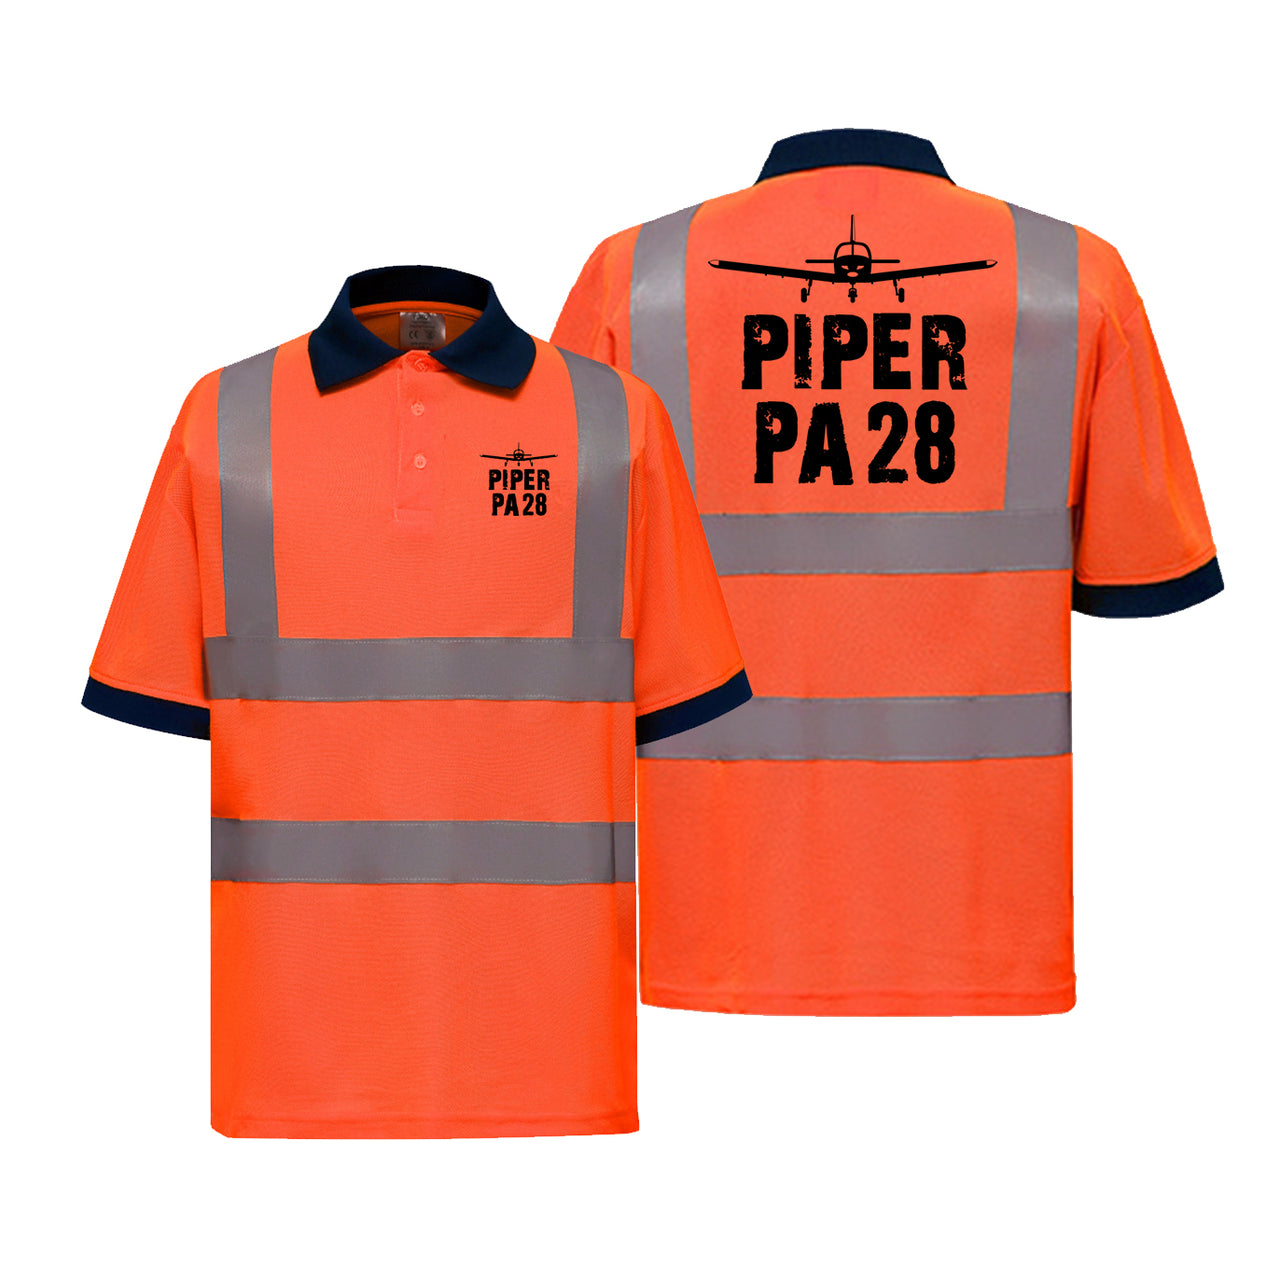 Piper PA28 & Plane Designed Reflective Polo T-Shirts